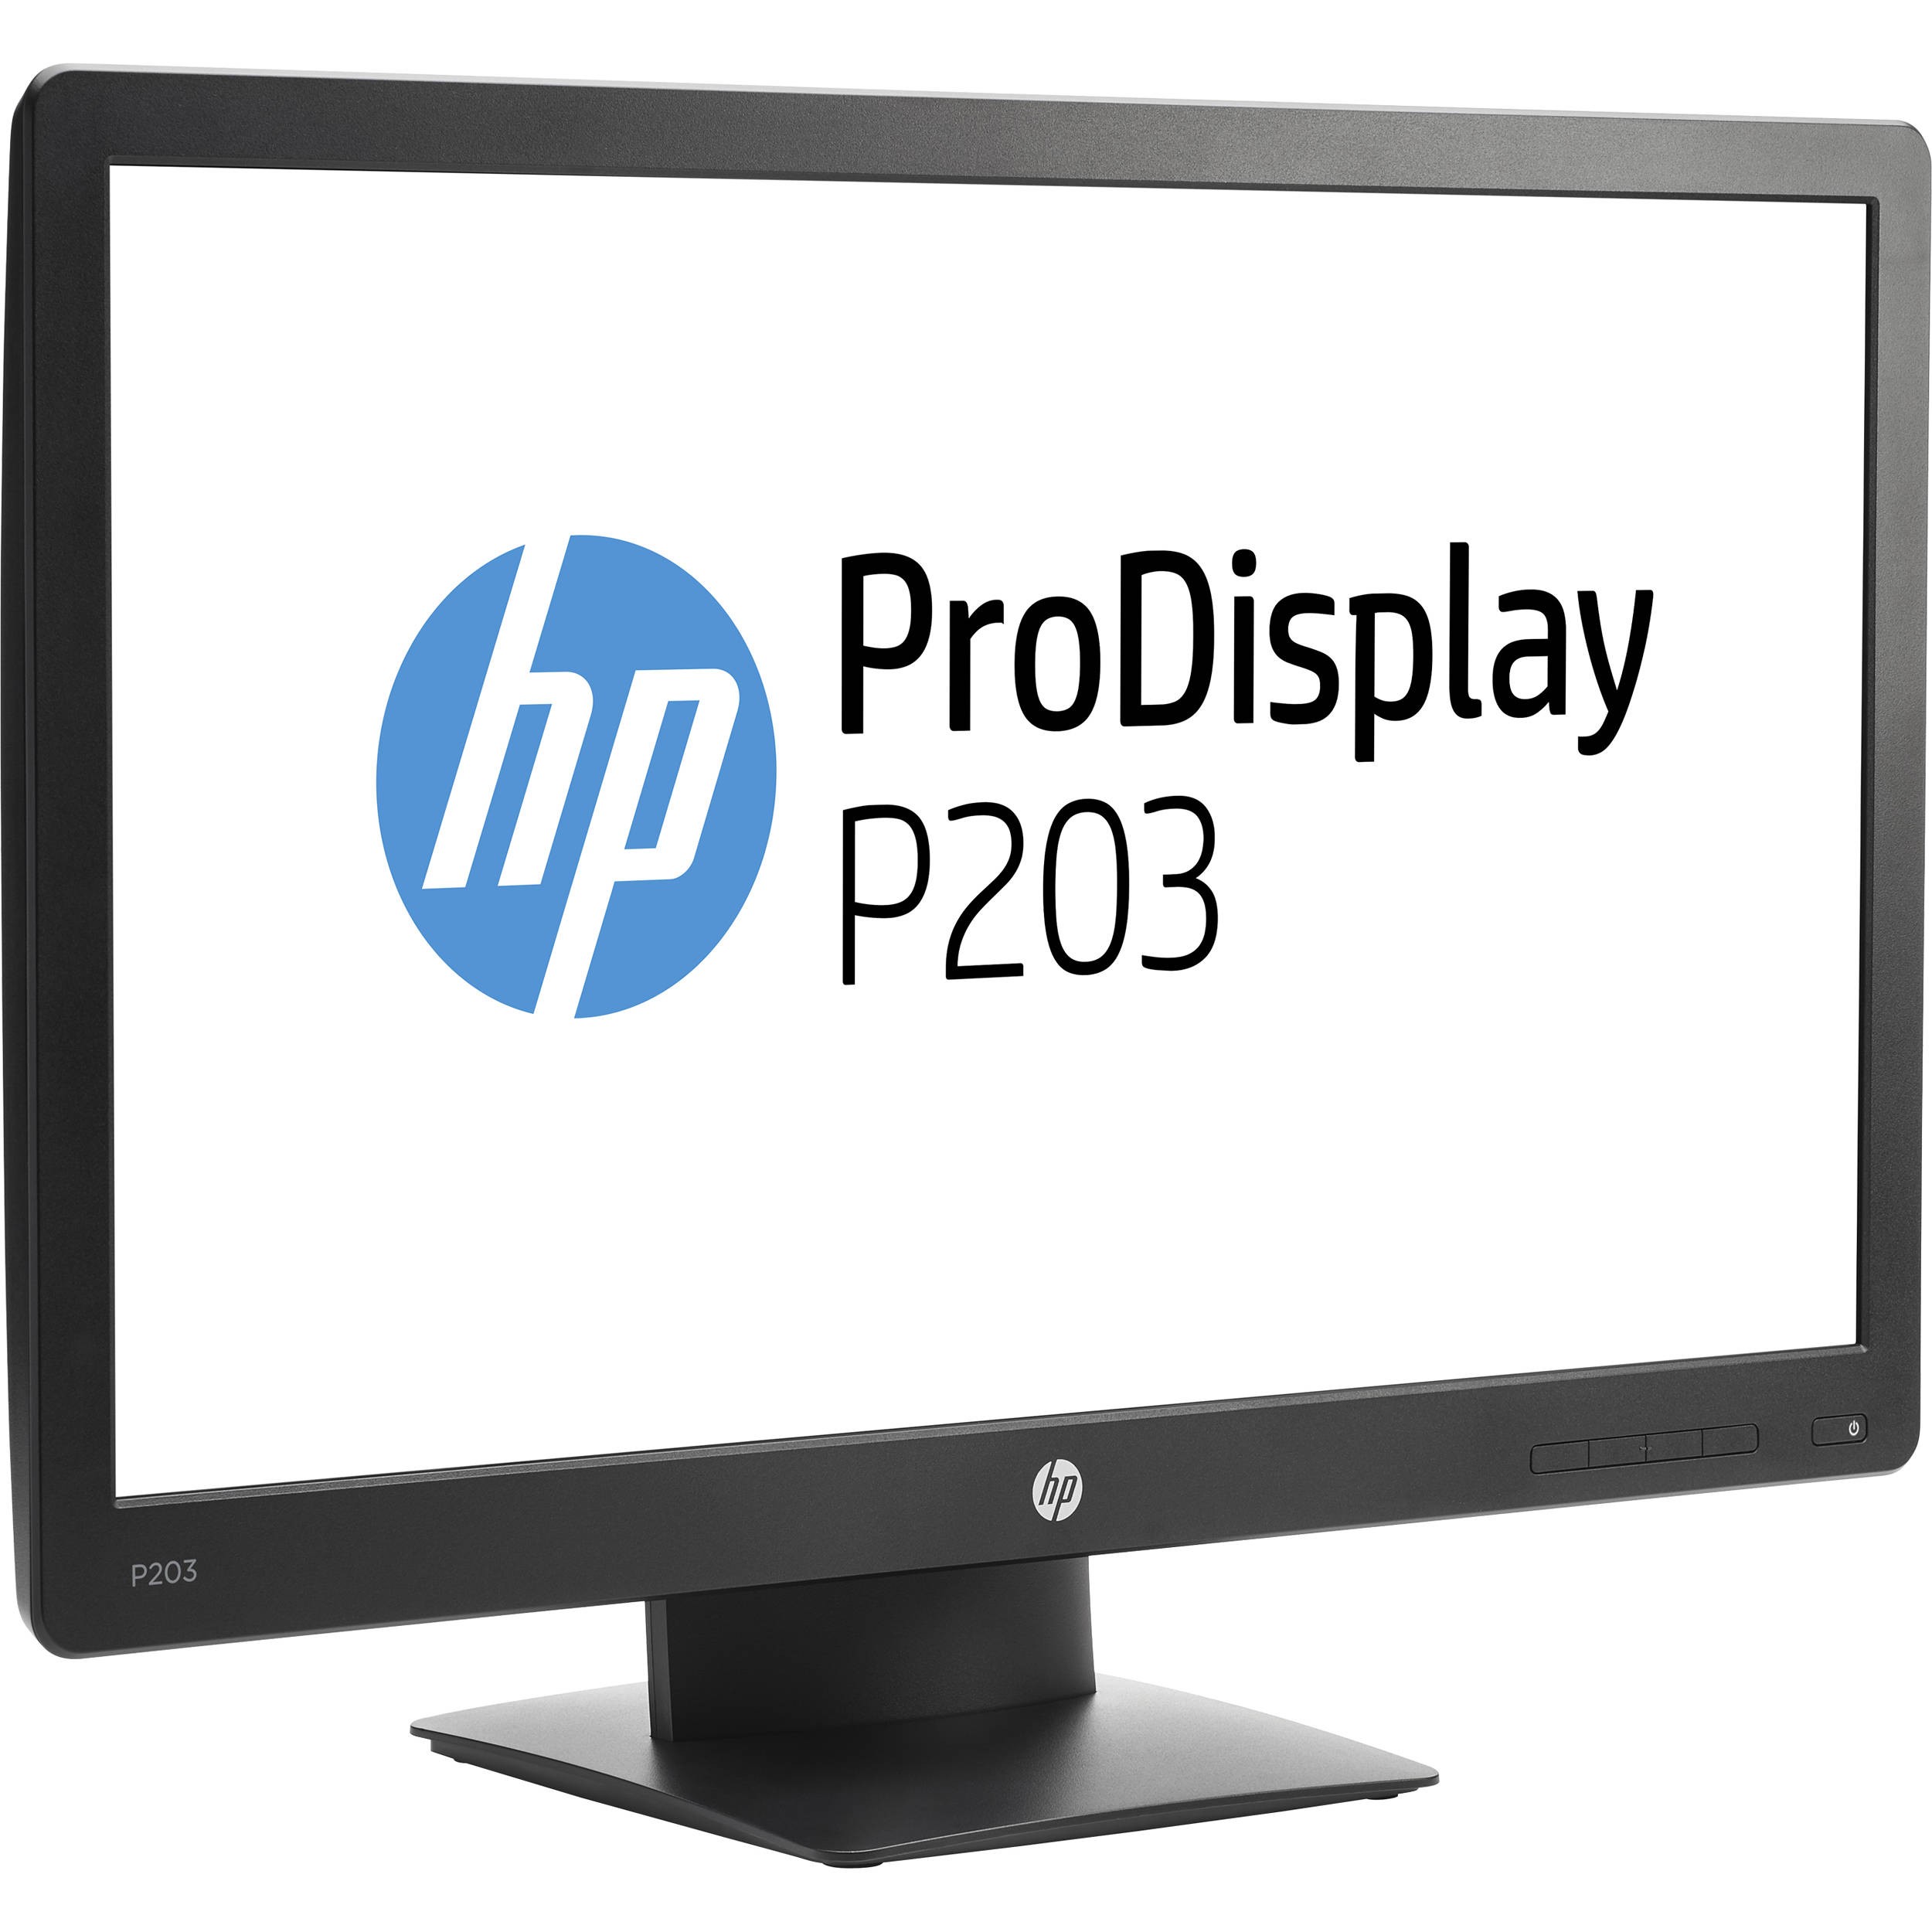 HP ProDisplay P203  20" HD+ 1600x900 16:9 LED LCD Monitor X7R53A8 OB